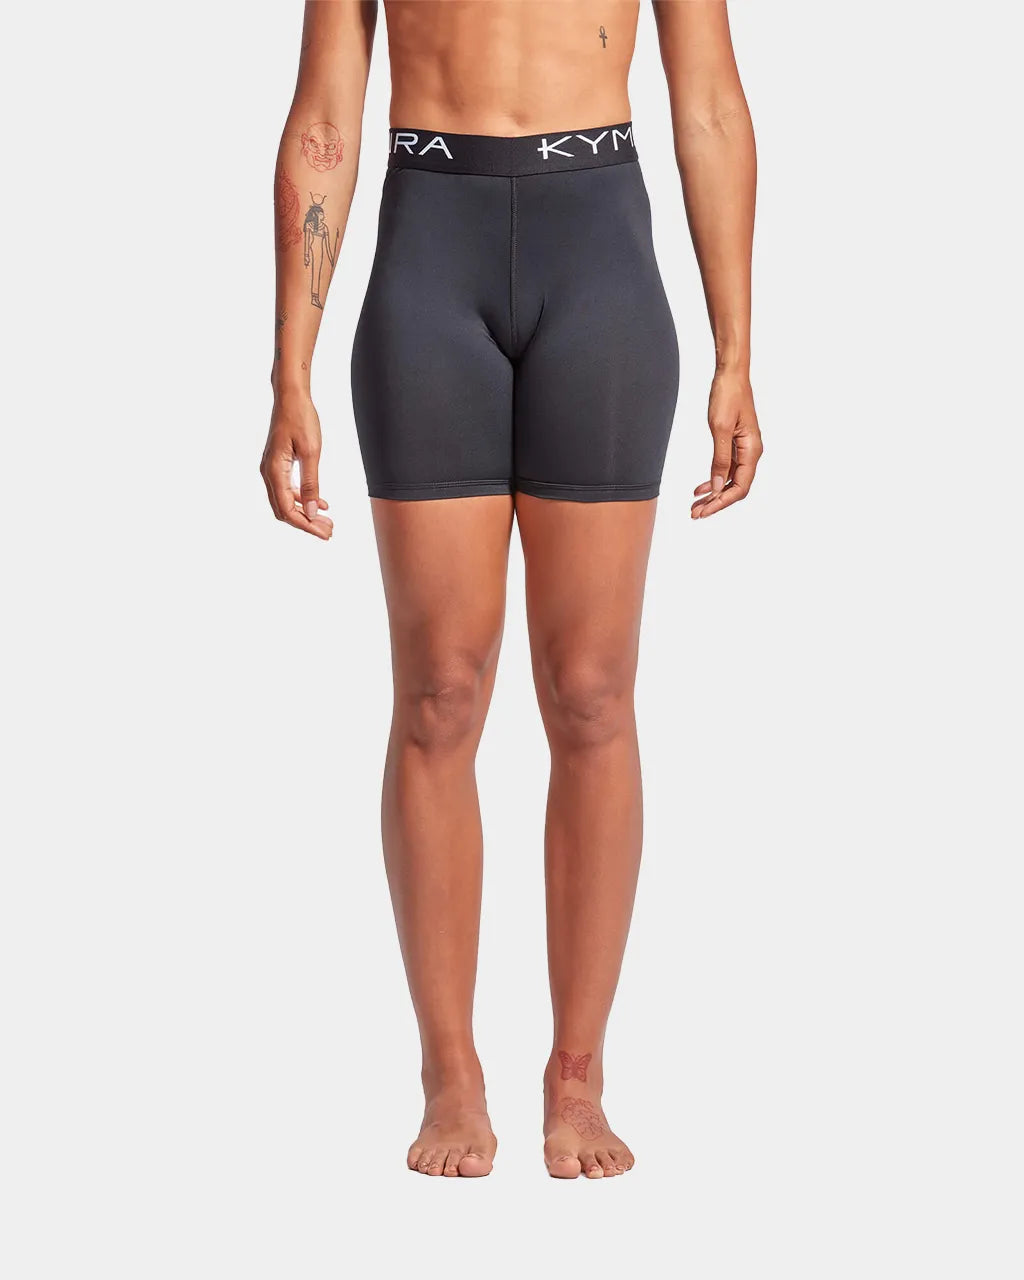 KYMIRA CHARGE Infrared Women's Shorts